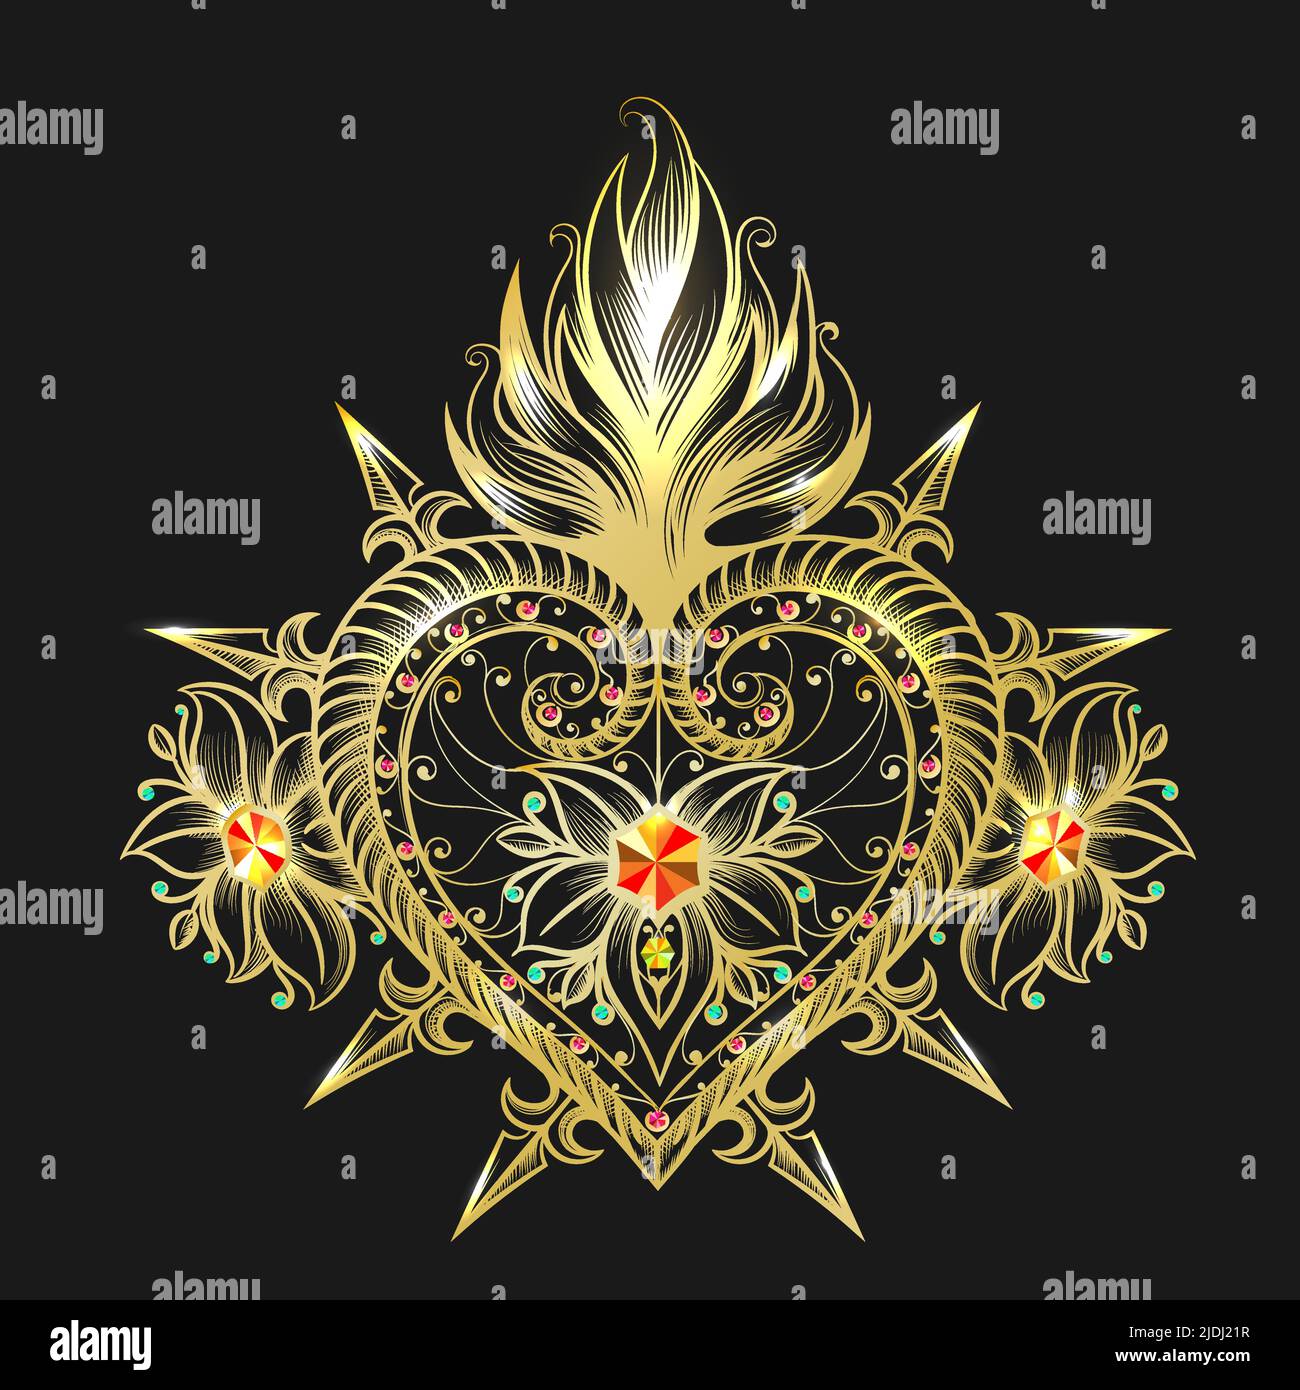 Golden Sacred Heart Symbol Isolated on Black. Vector illustration. Stock Vector